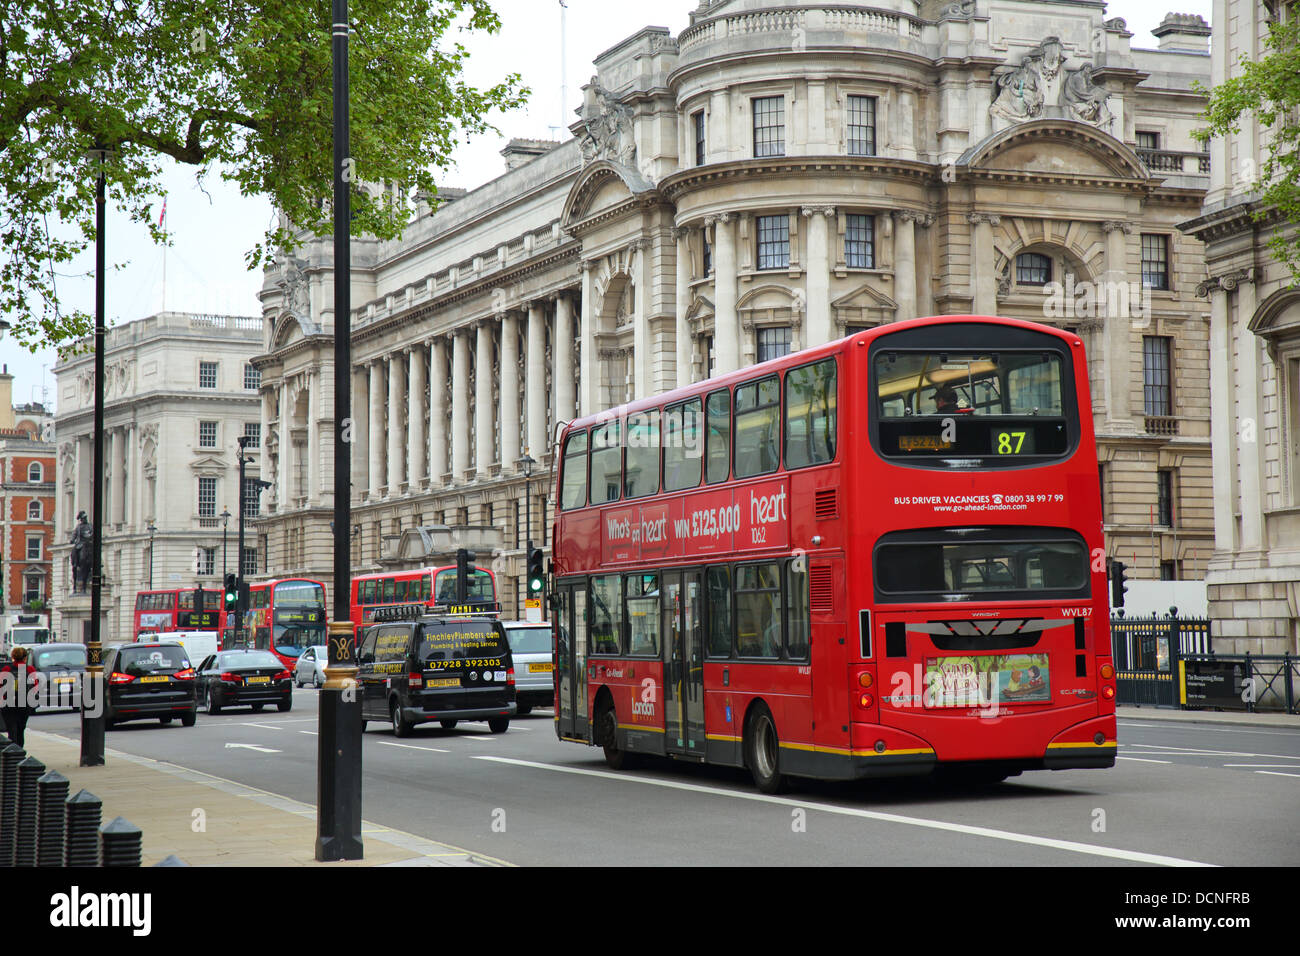 Double decker bus in London England Stock Photo